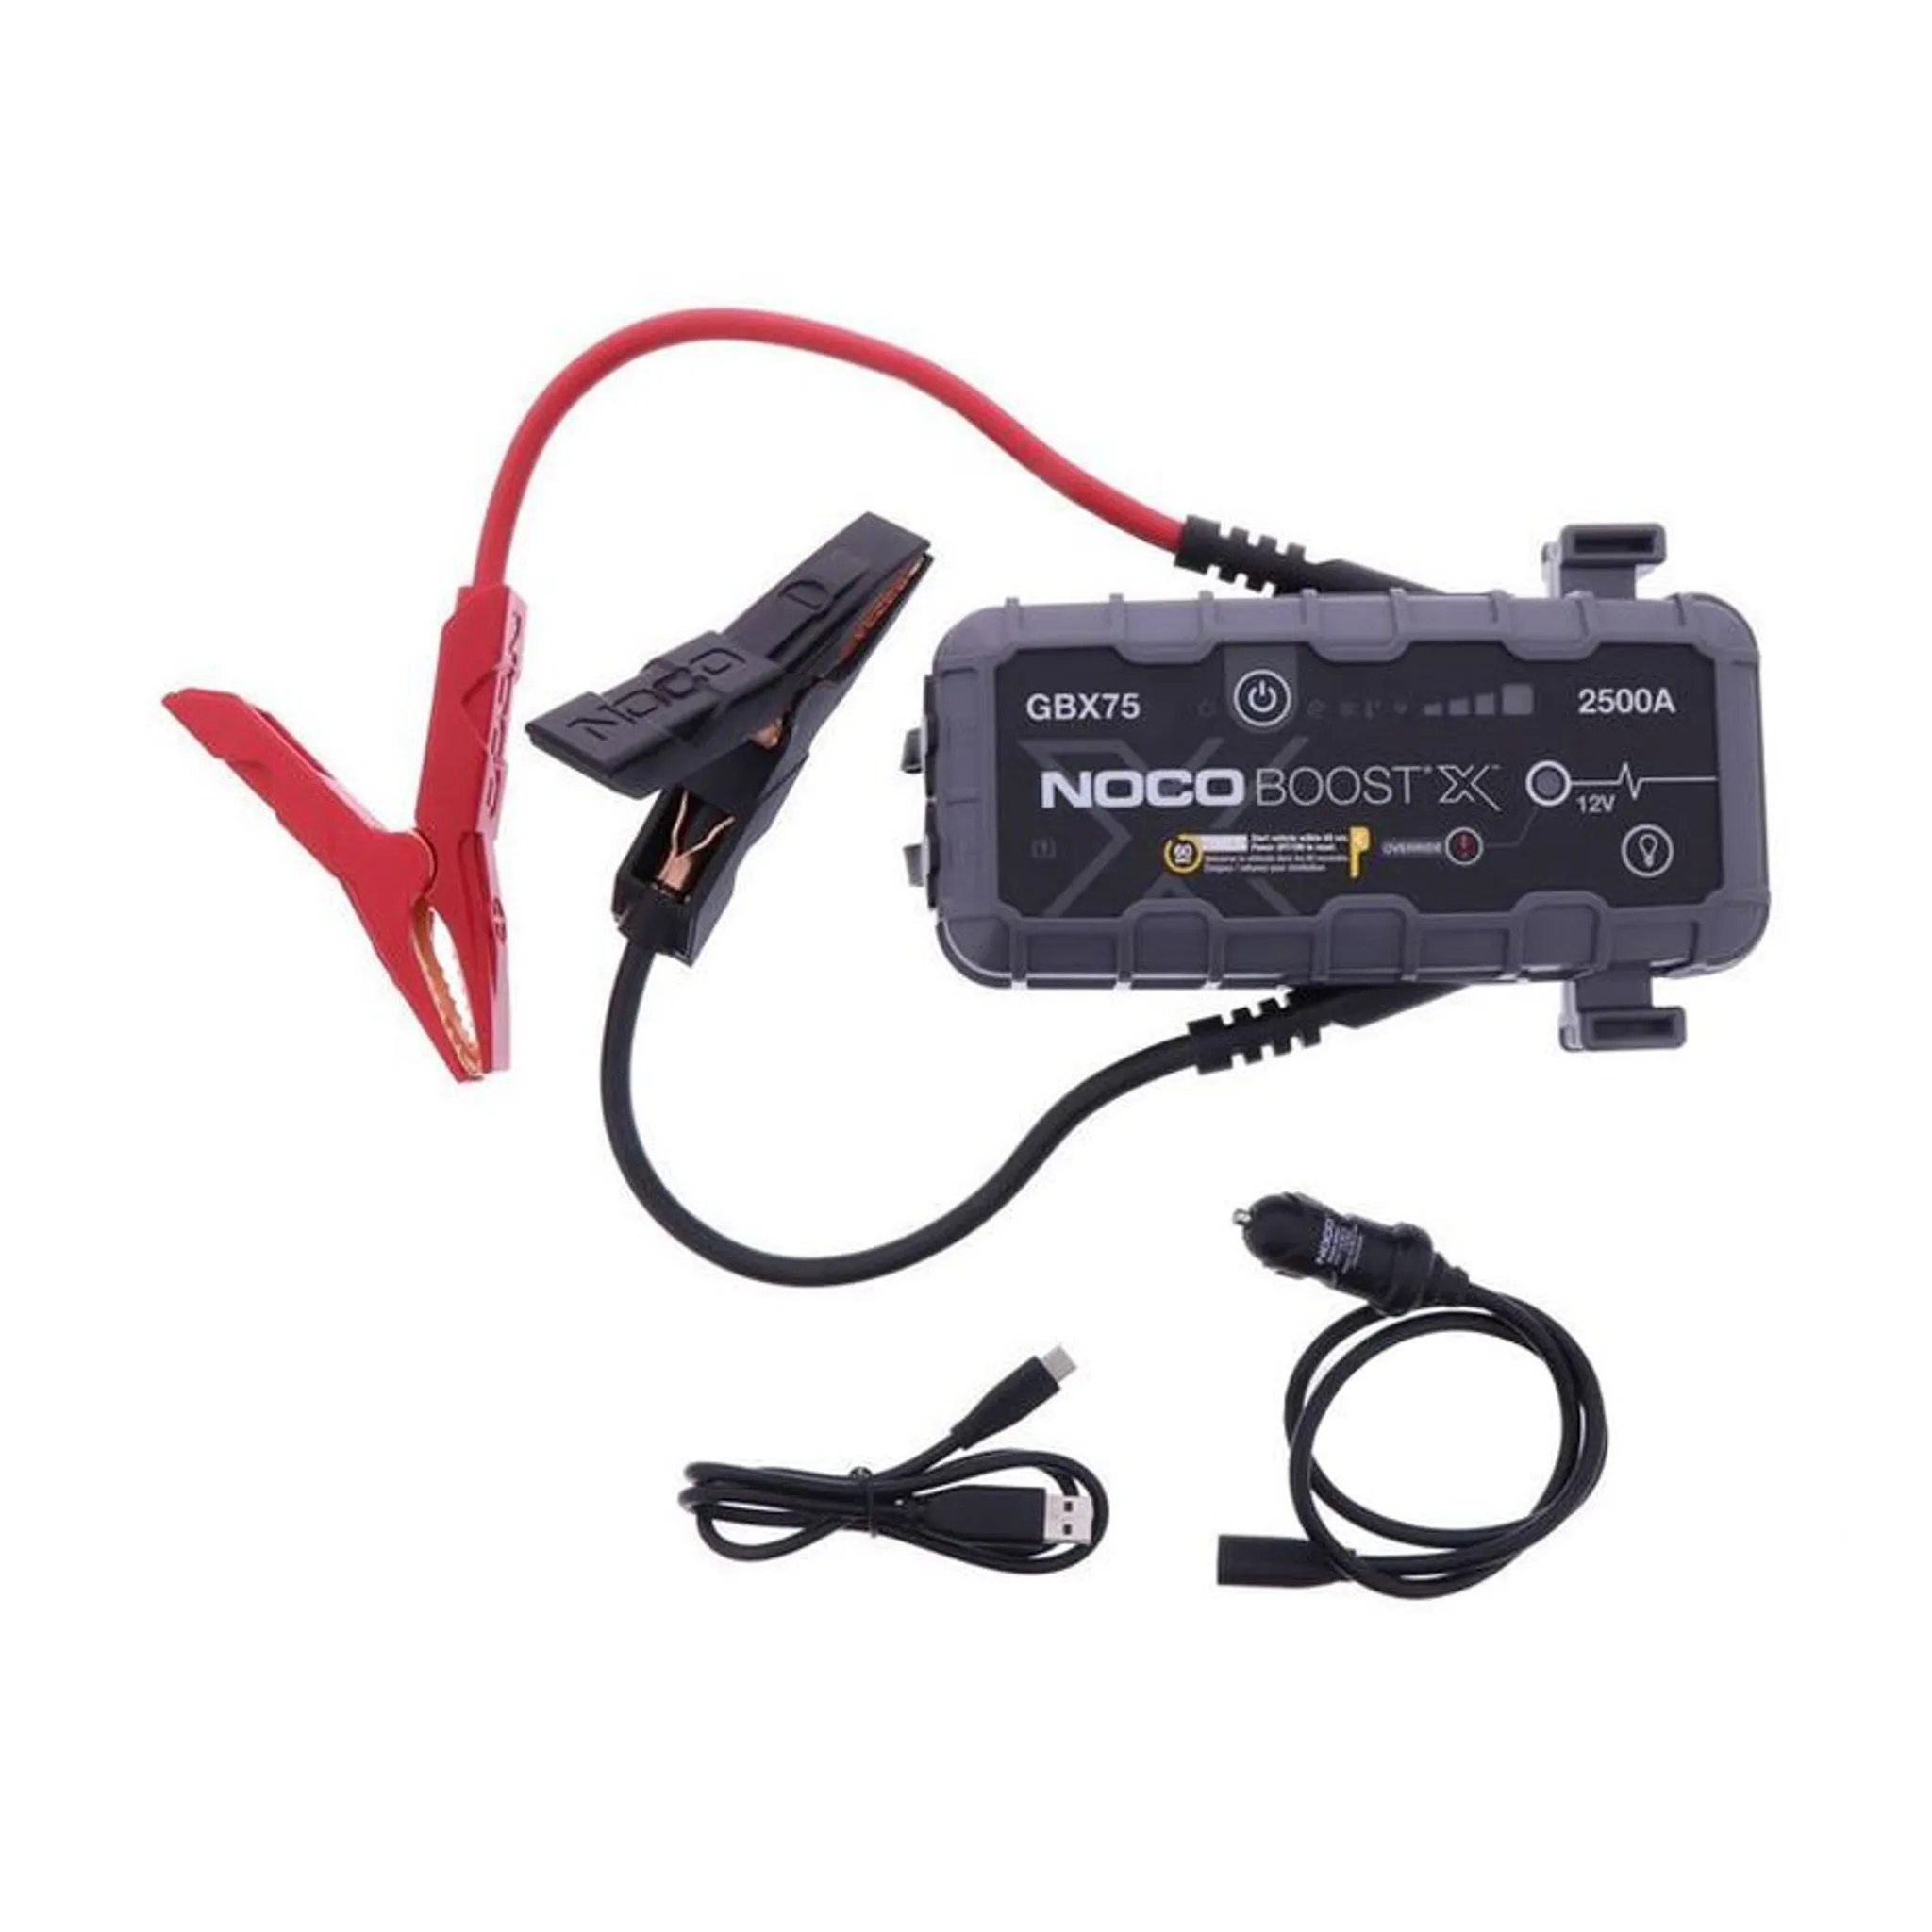 12V UltraSafe Starthilfe Powerbank, Auto Batterie Booster, Tragbare USB  Ladegerät, Starthilfekabel und Überbrückungskabel